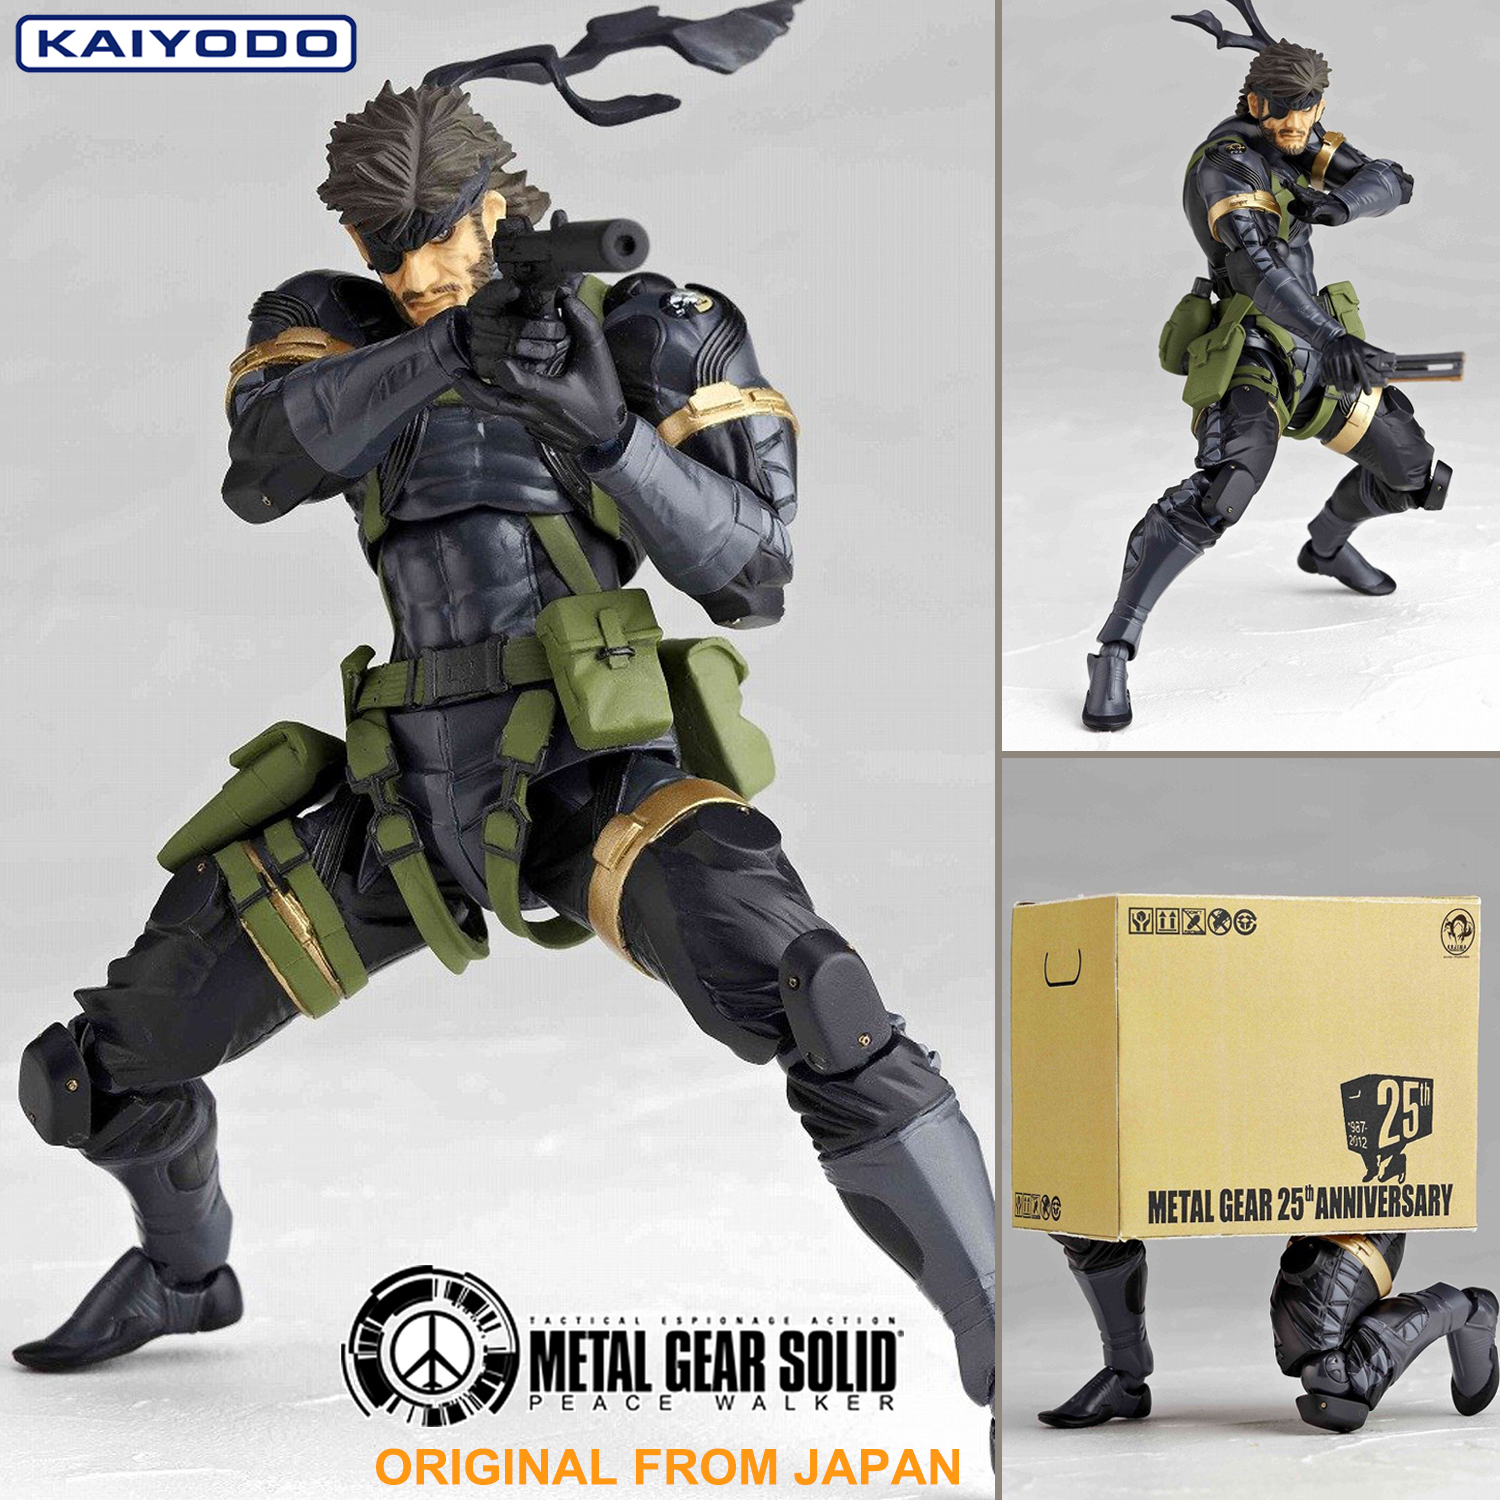 Model โมเดล ของแท้ 100% Kaiyodo Revoltech จากการ์ตูนเรื่อง Metal Gear Solid Peace Walker เมทัลเกียร์ โซลิด พีซ วอคเกอร์ Big Boss Naked Snake เน็คเค็ด สเนค Ver Original from Japan Figma ฟิกม่า Anime ขยับแขน-ขาได้ ของขวัญ อนิเมะ การ์ตูน มังงะ ฟิกเกอร์